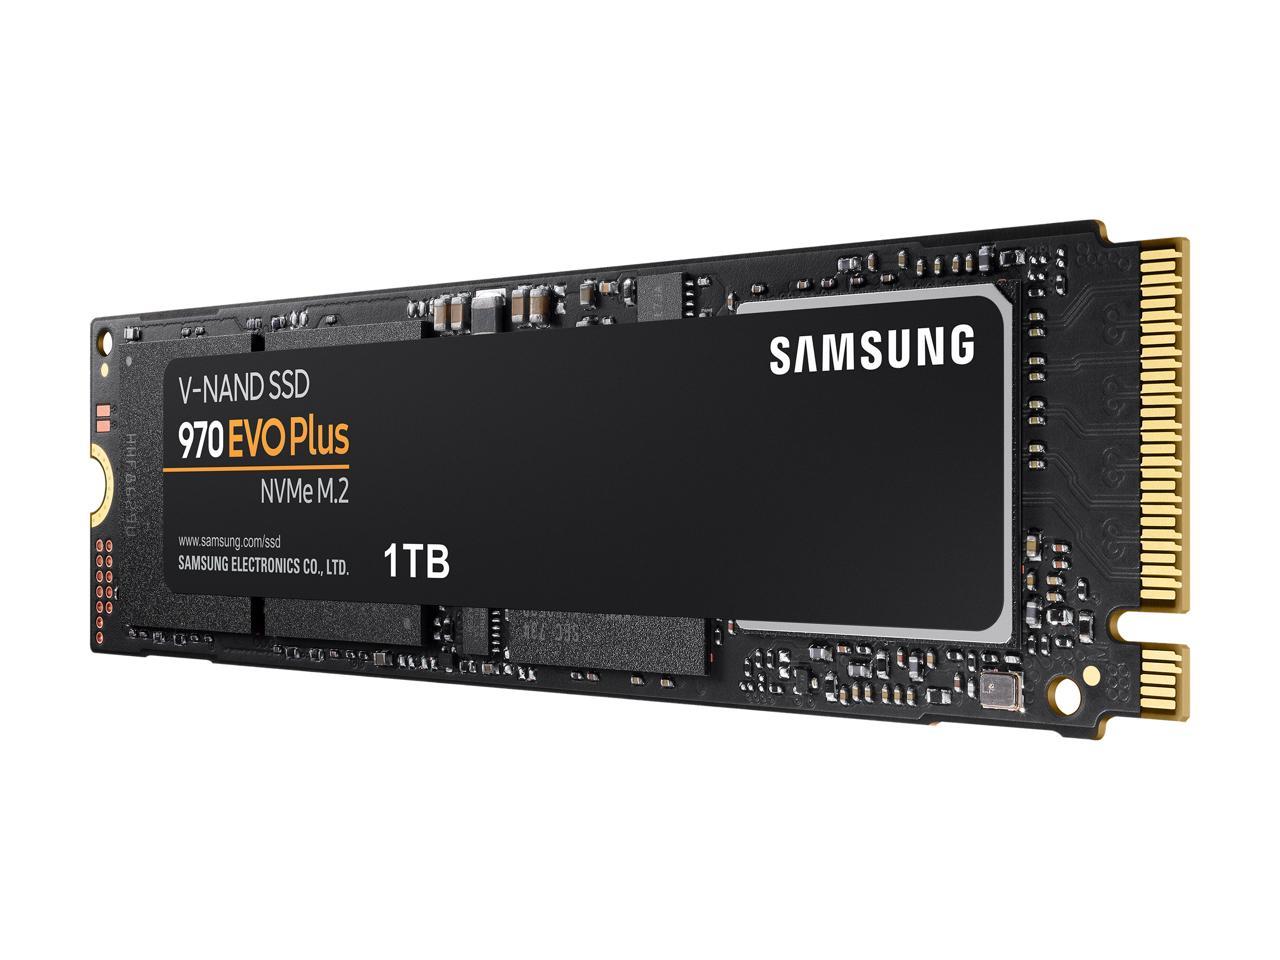 1TB Samsung 970 EVO Plus NVMe SSD $73